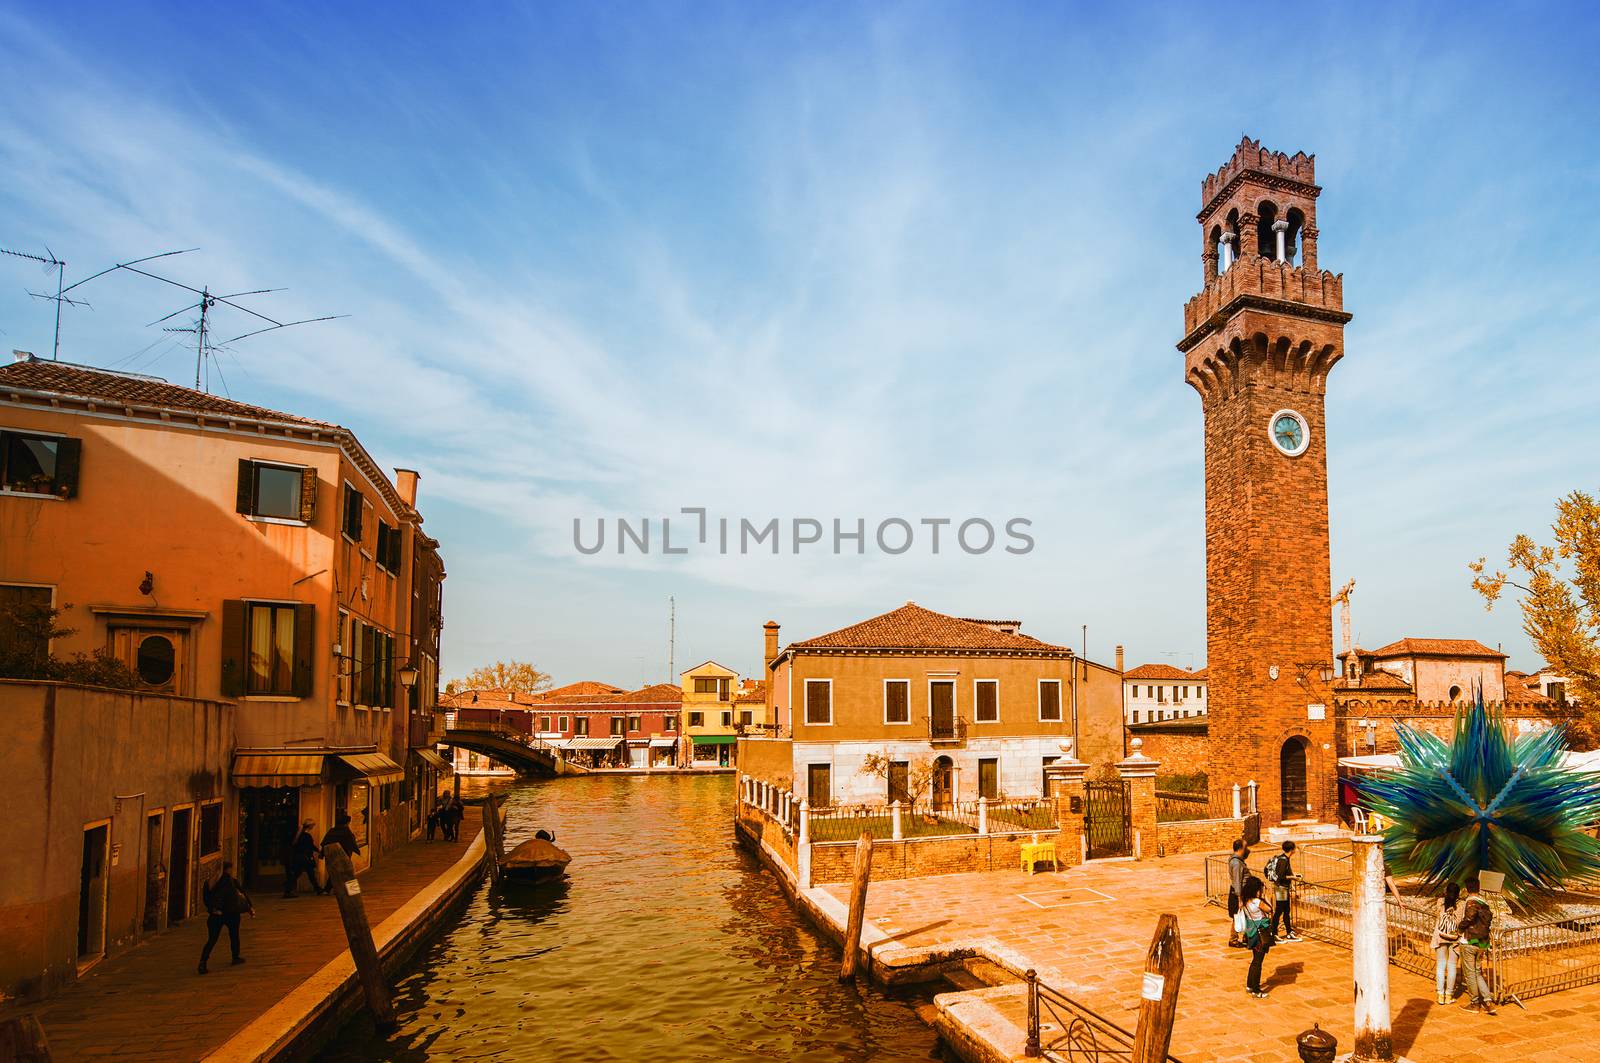 Venice, Italy. Tourists enjoying city landmarks and canals.